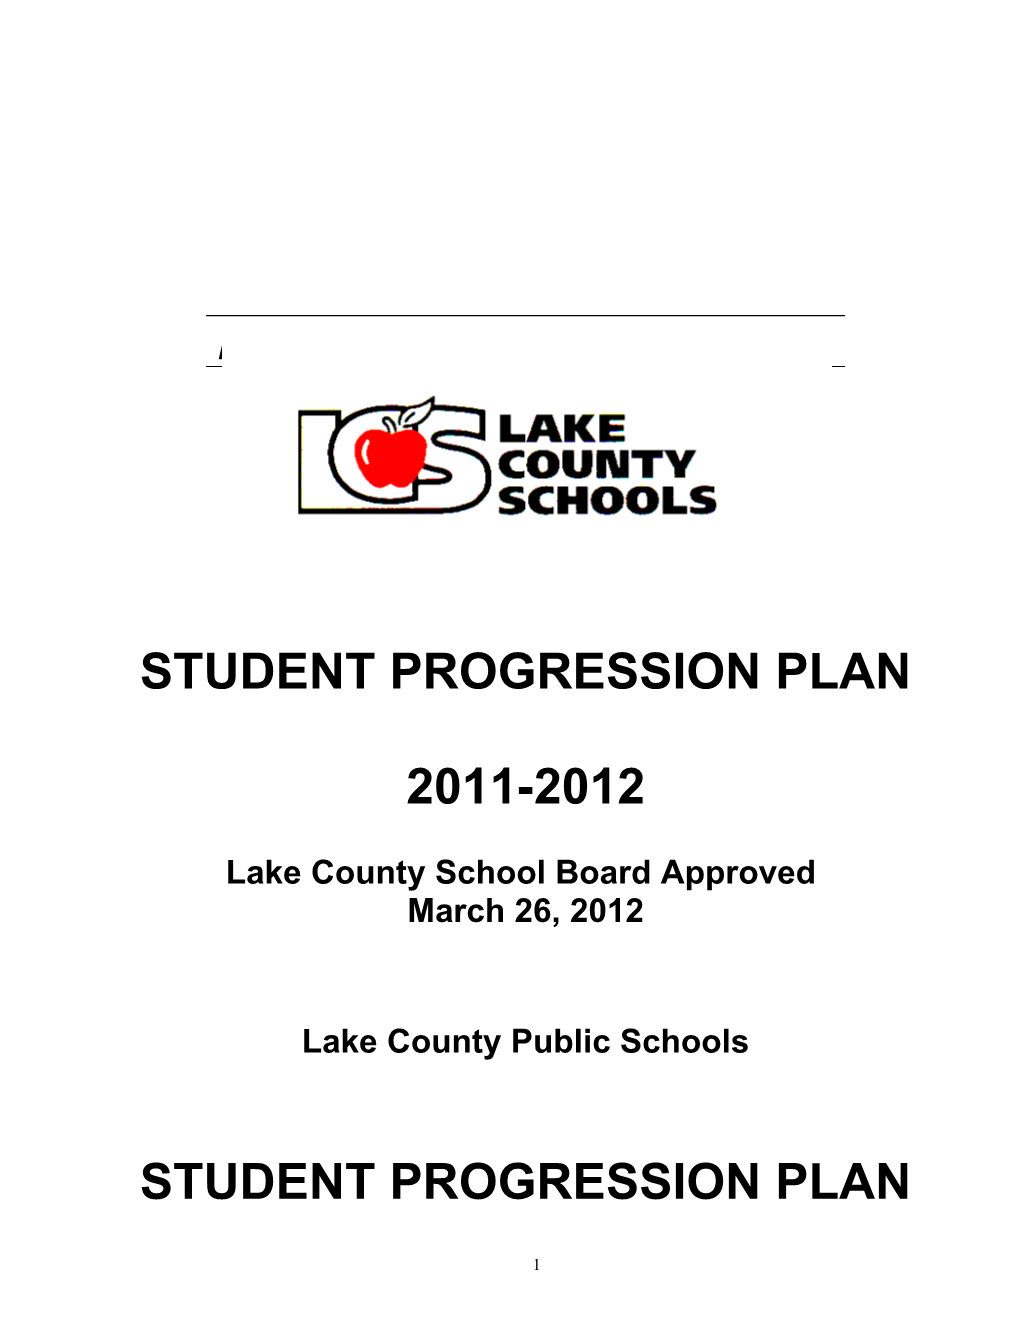 Lake County School Board Approved